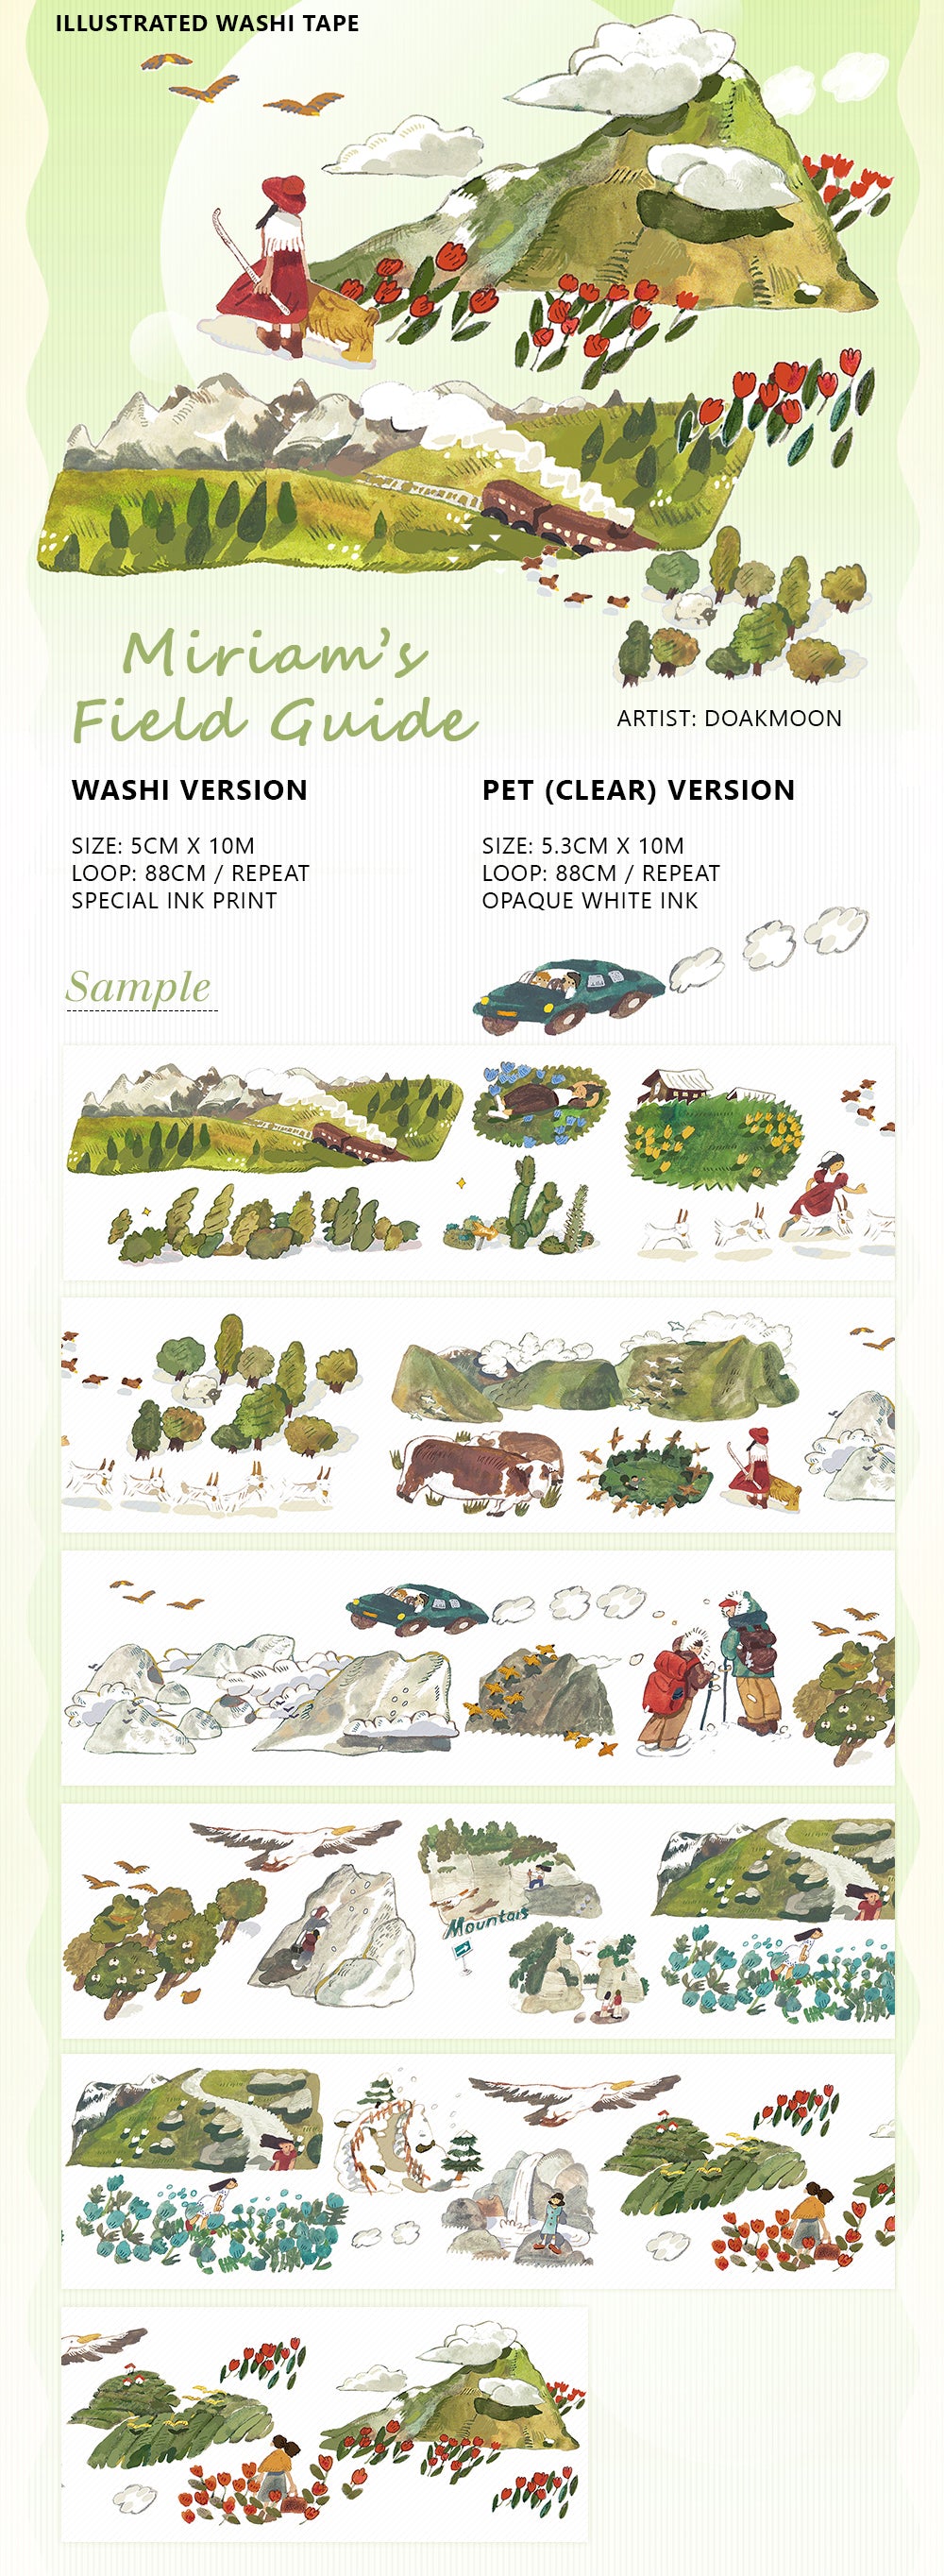 Falling Land Studio Washi Tape: Miriam's Field Guide